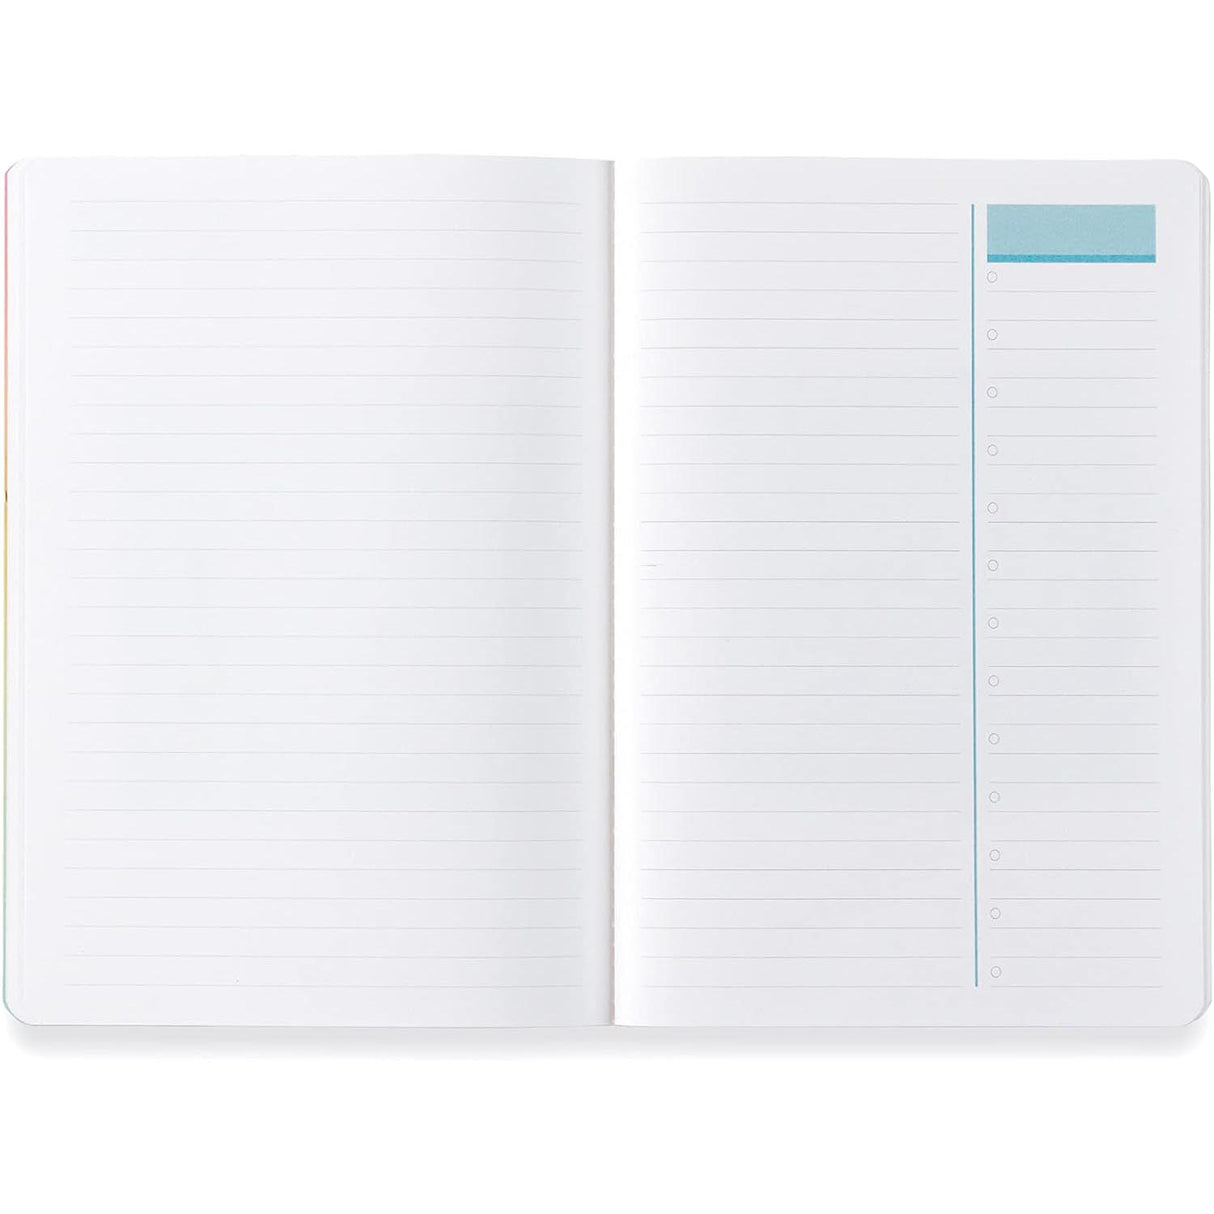 Erin Condren Hello Kitty Petite Productivity Notebook - Lined Checklist